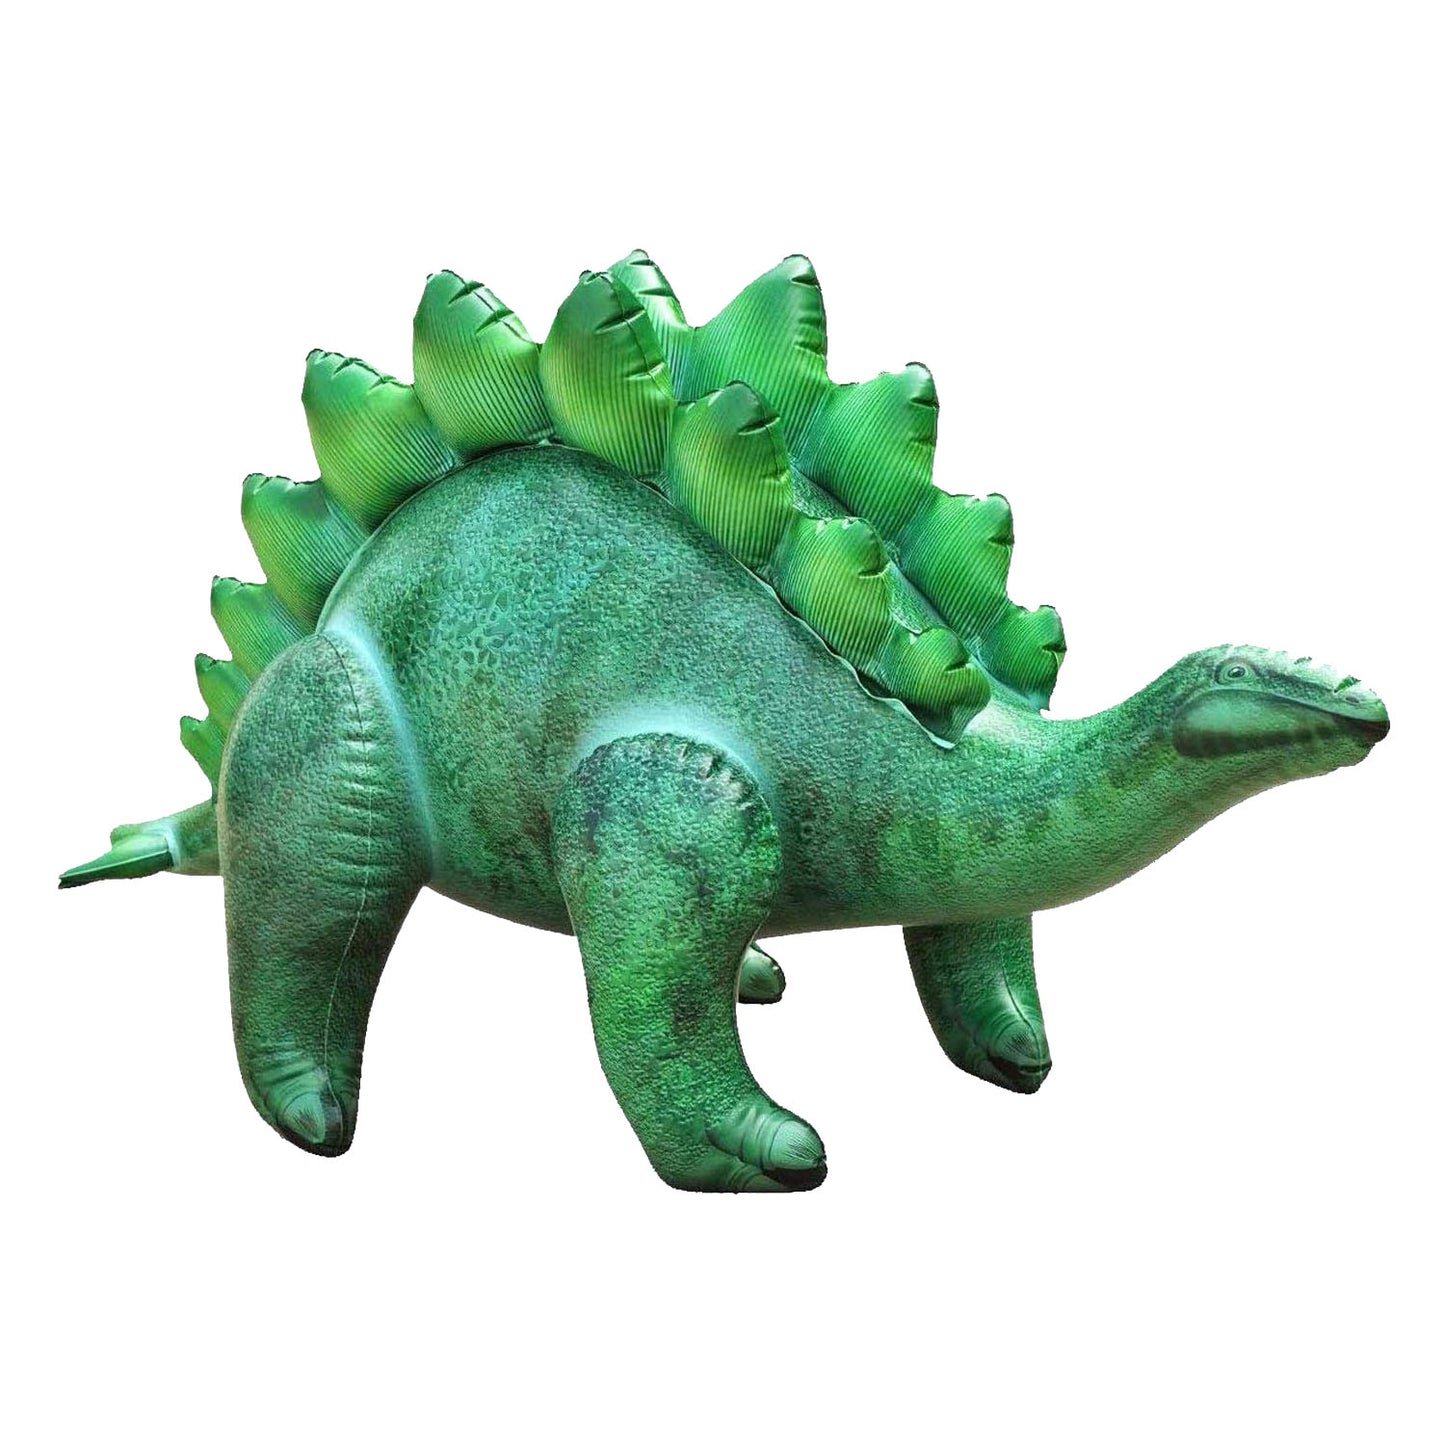 Dinosaur Collection Trex Brachiosaurus Triceratops Raptor and other Dinosaurs 7 piece, Size 37+ inch [JC-DINO7]